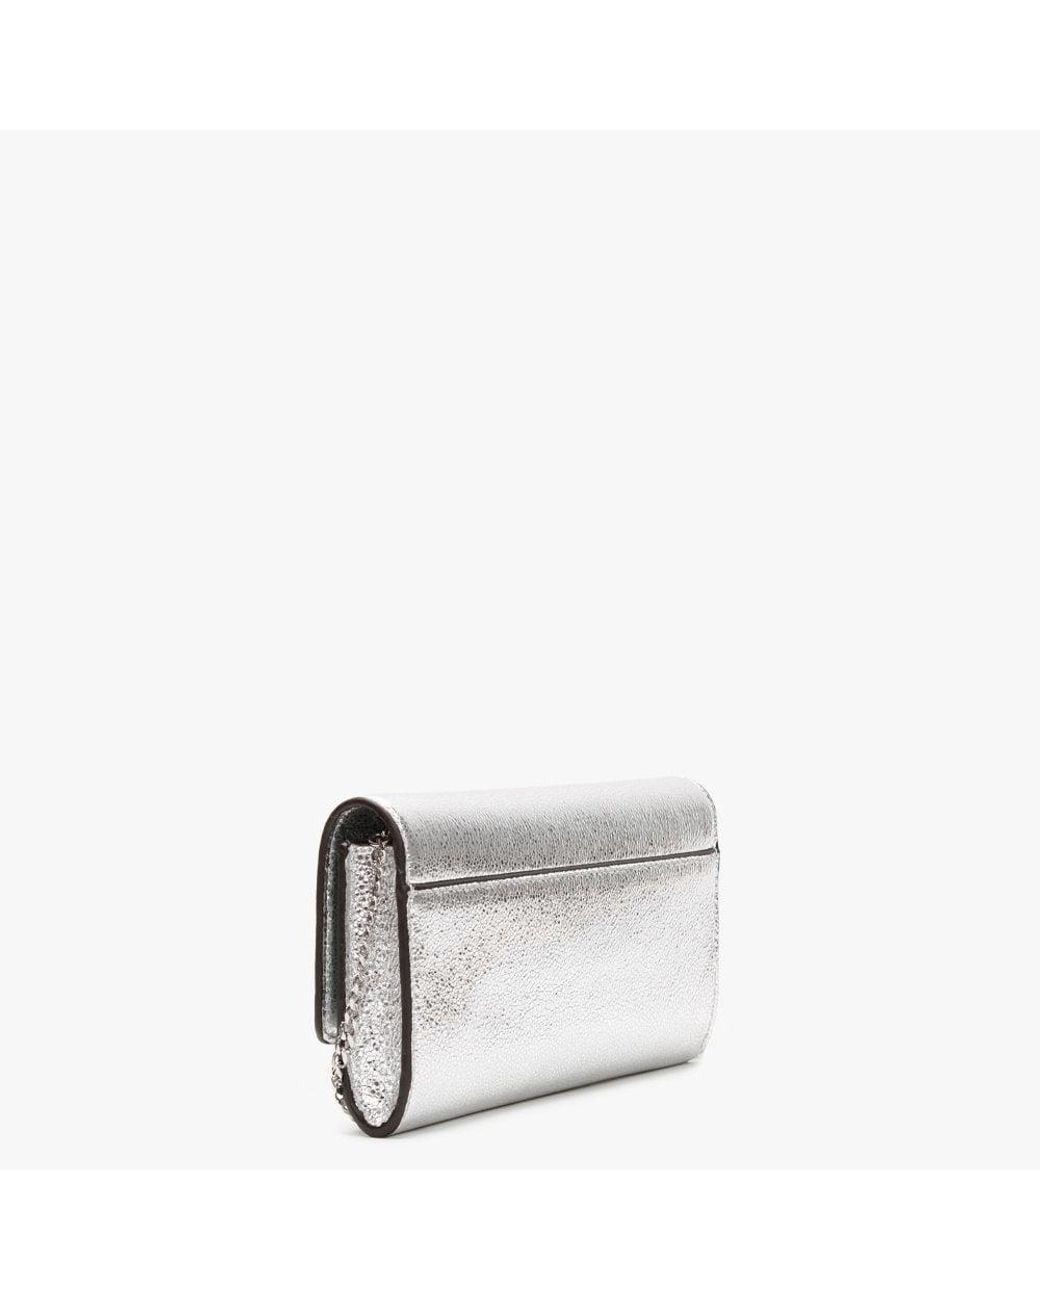 Guess Dinner Date Silver Clutch Bag in Metallic | Lyst